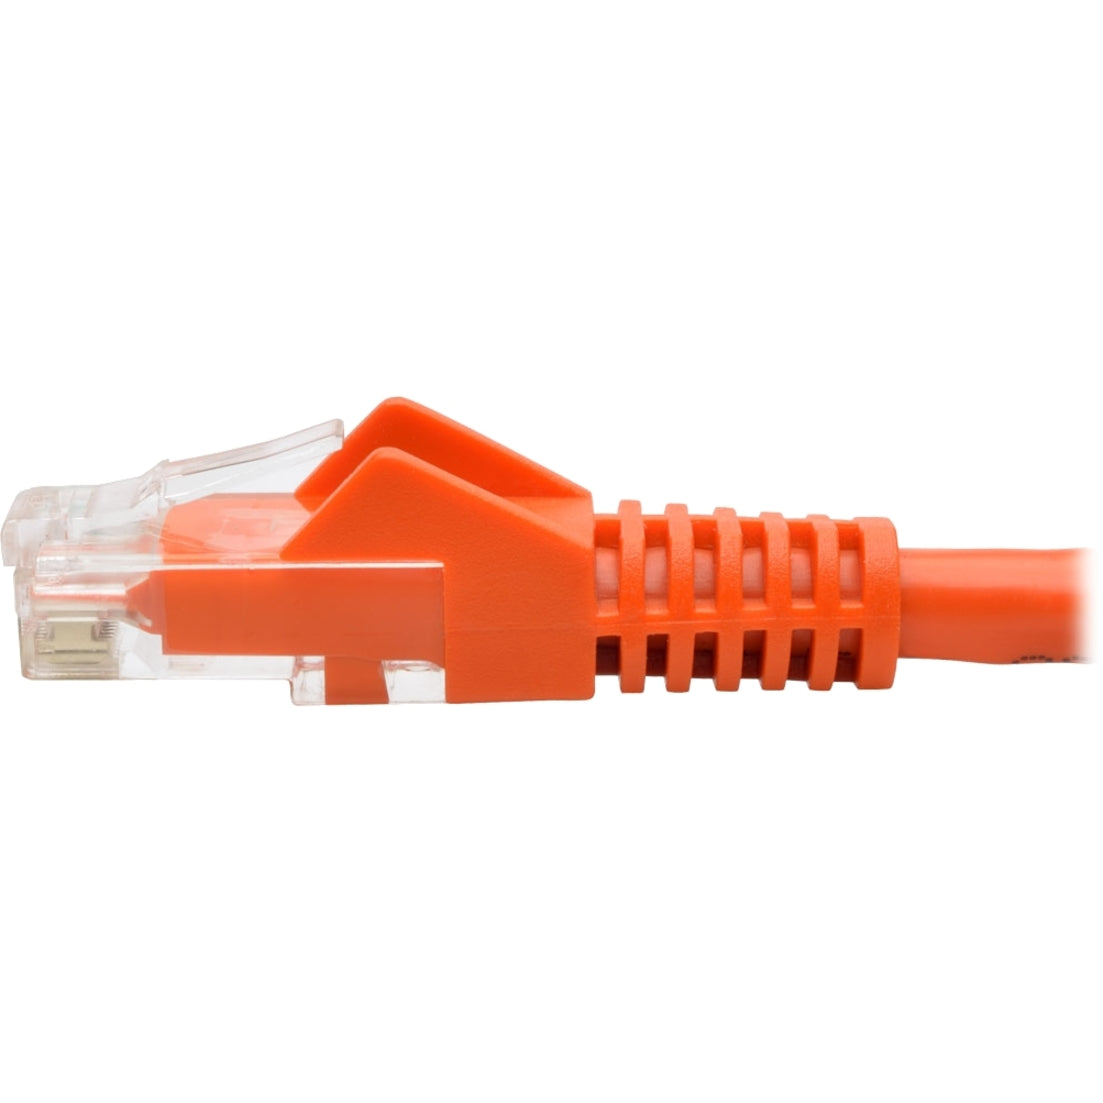 Tripp Lite N201-006-OR Cat6 Gigabit Snagless Molded UTP Patch Cable (RJ45 M/M), Orange, 6 ft, Stress Resistant, Crosstalk Protection, Strain Relief, 1 Gbit/s Data Transfer Rate